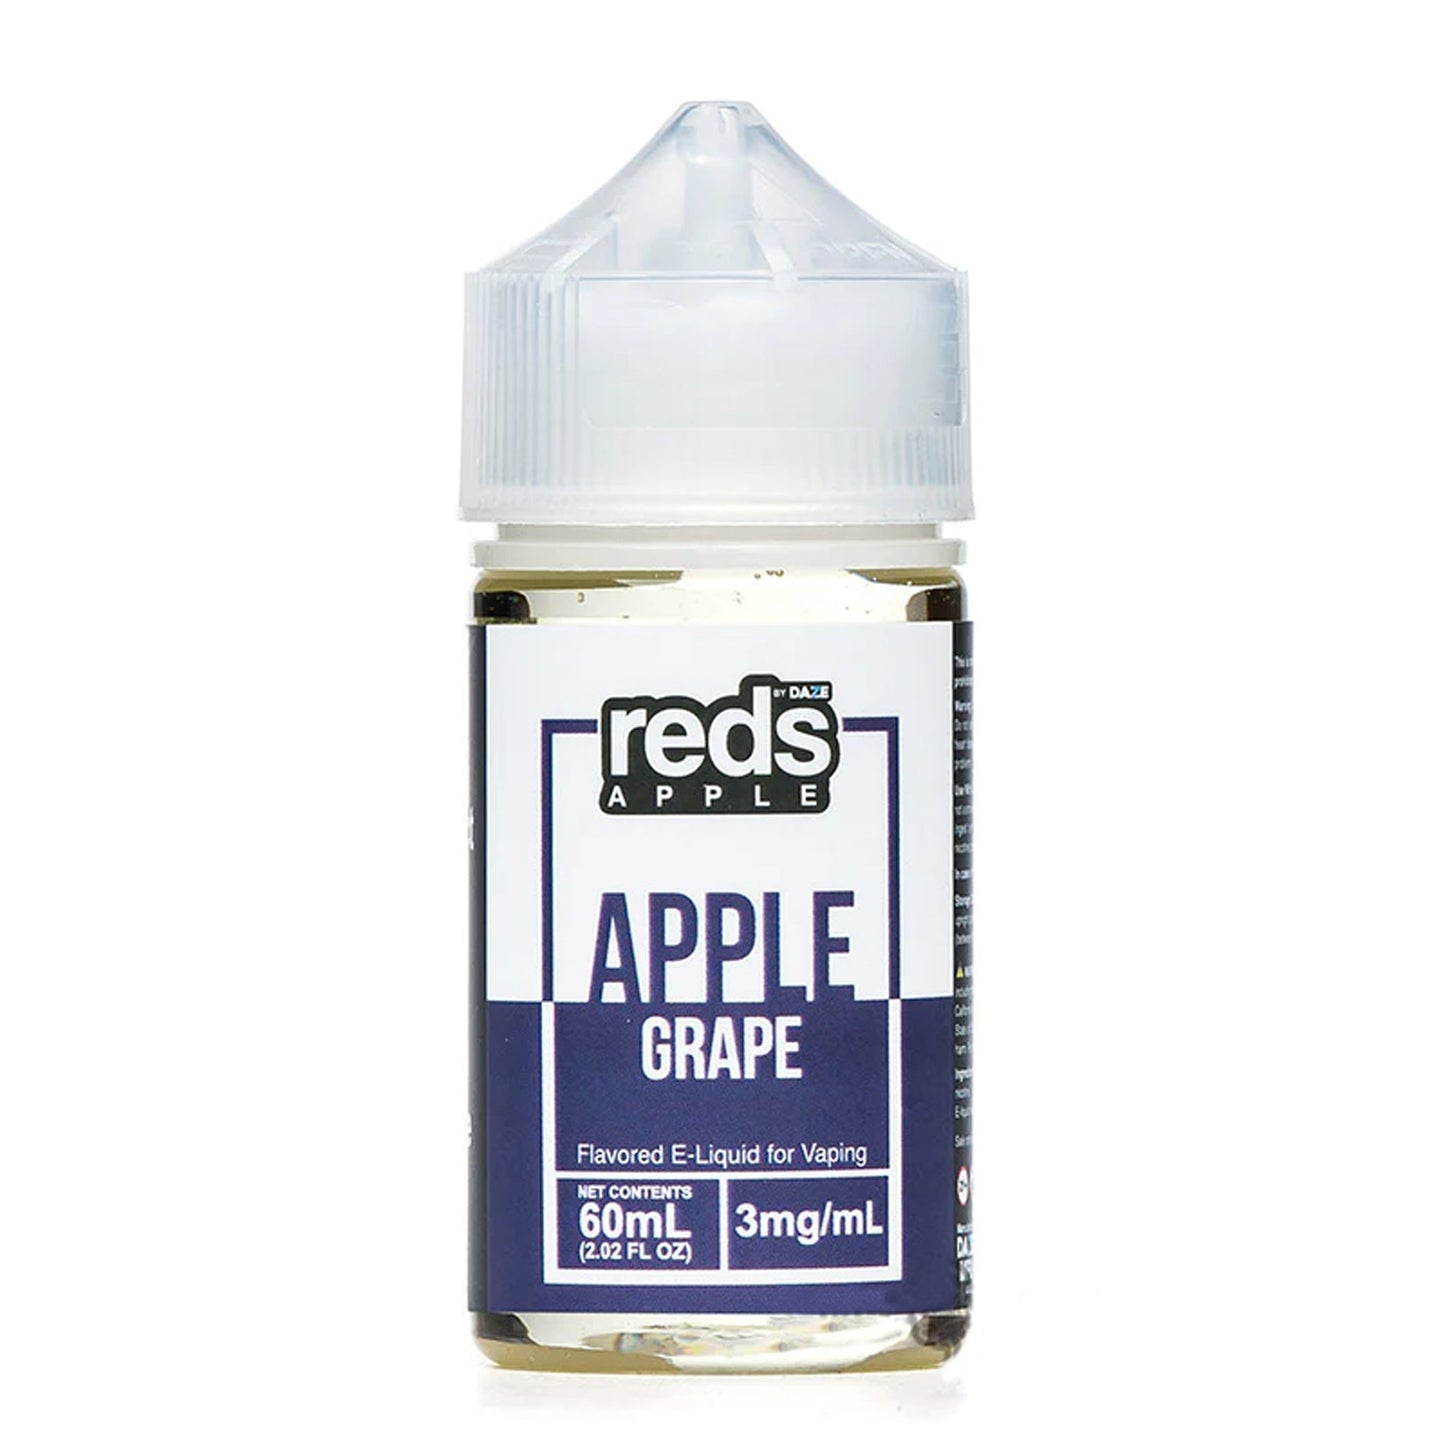 7 Daze Reds Apple 60ML - Grape Apple - Mobs Enterprise